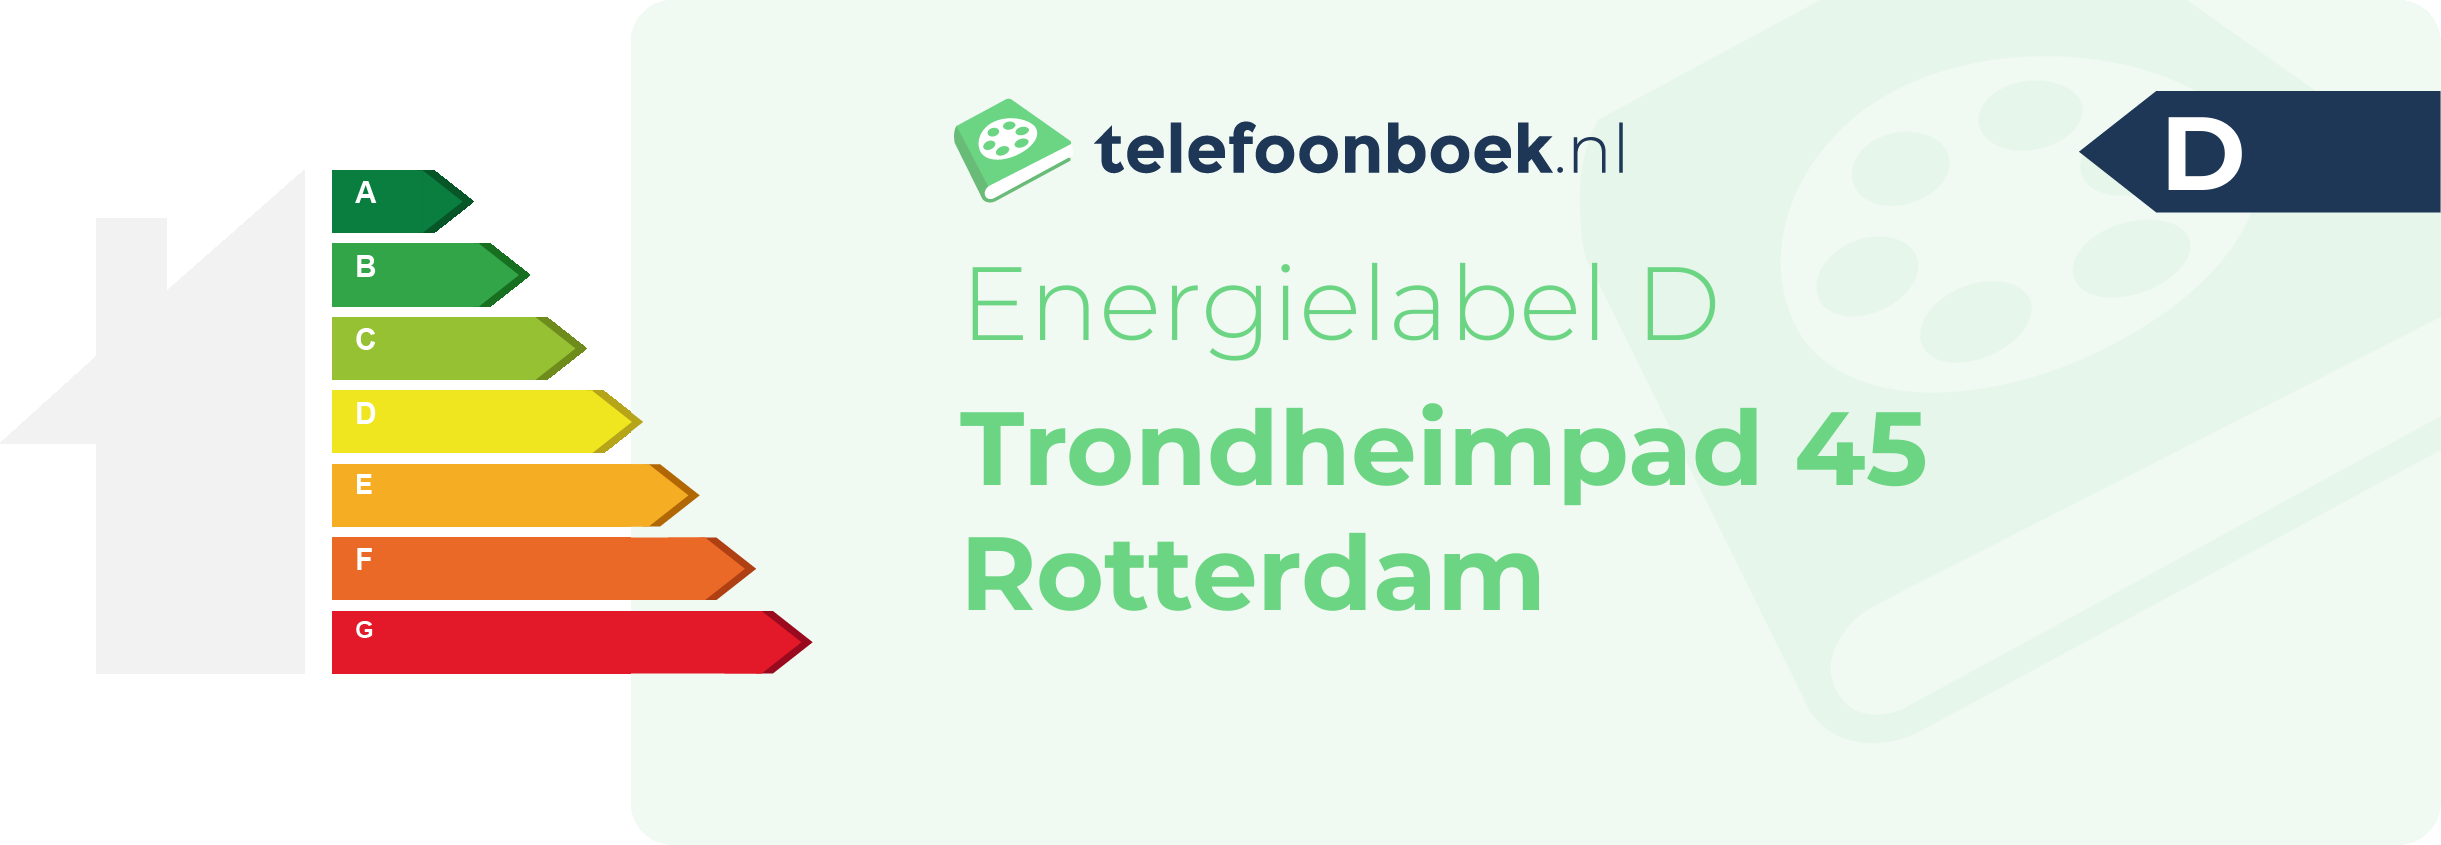 Energielabel Trondheimpad 45 Rotterdam